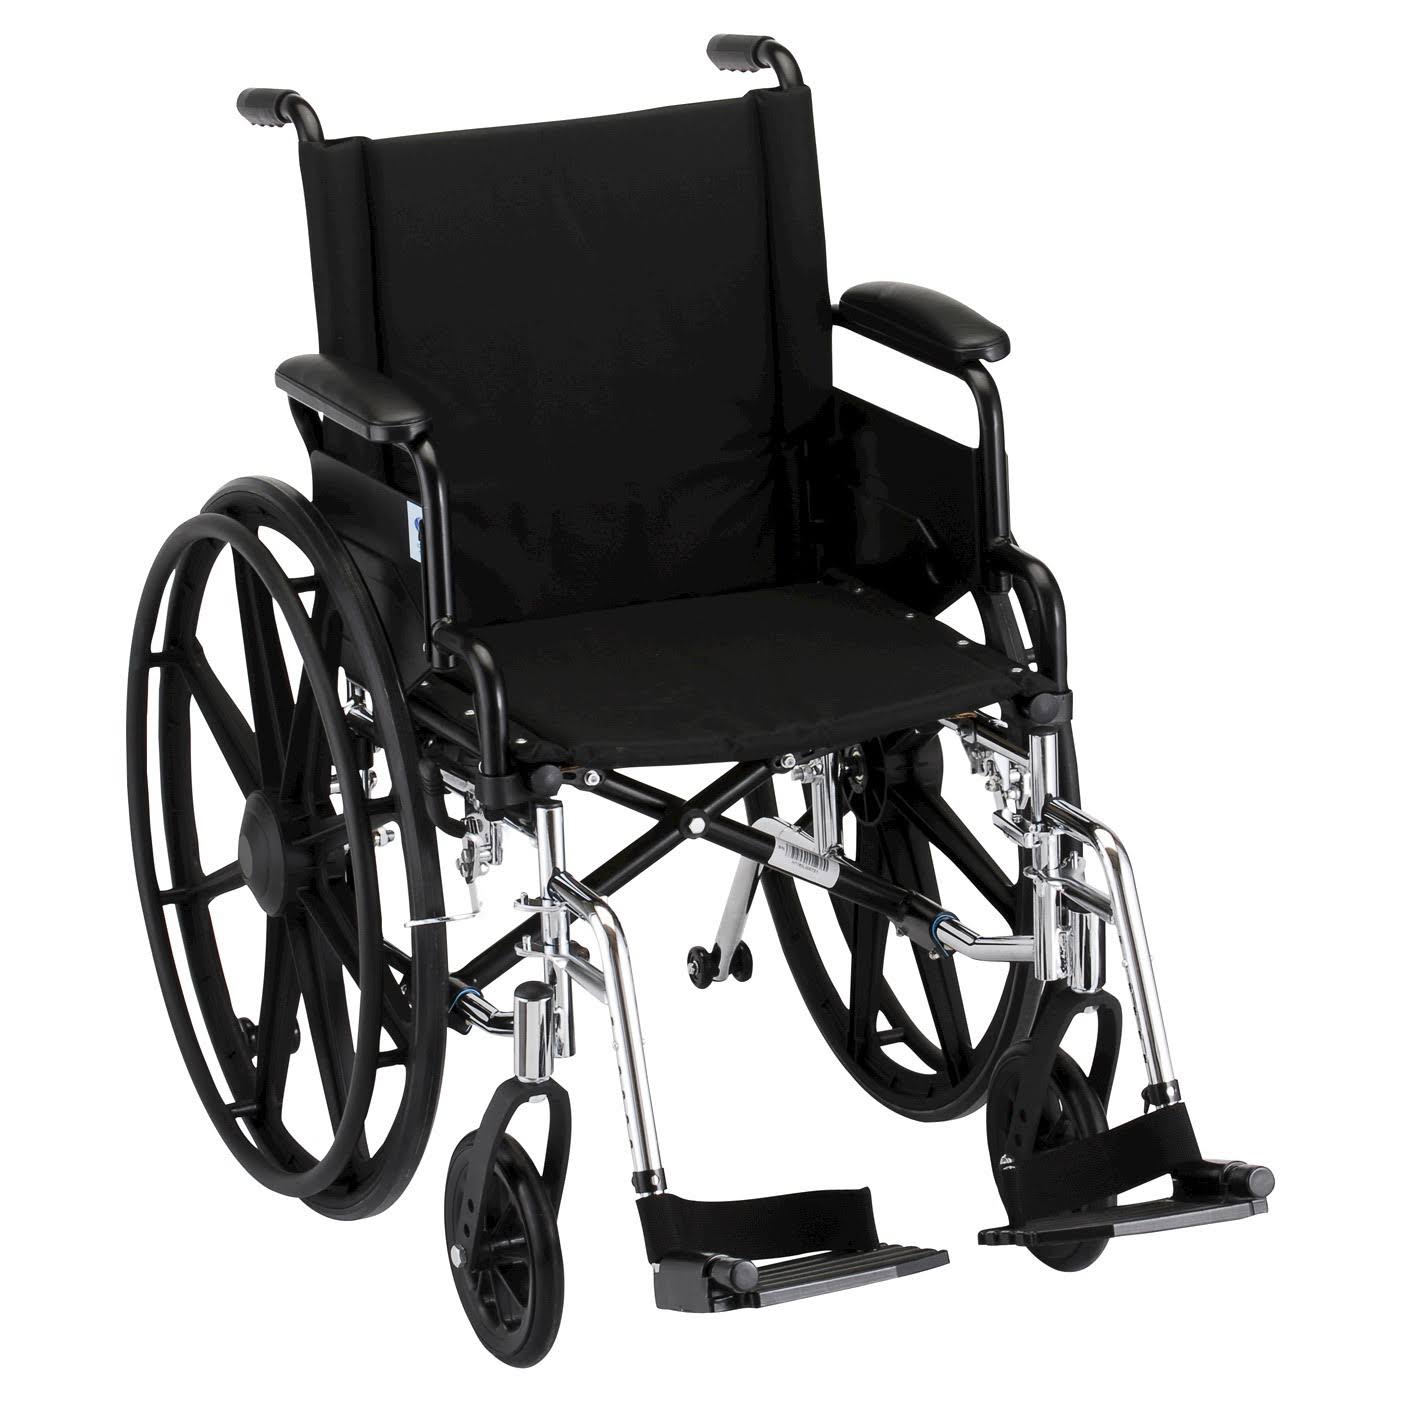 NOVA Medical Products Lightweight Wheelchair - Black, 18"